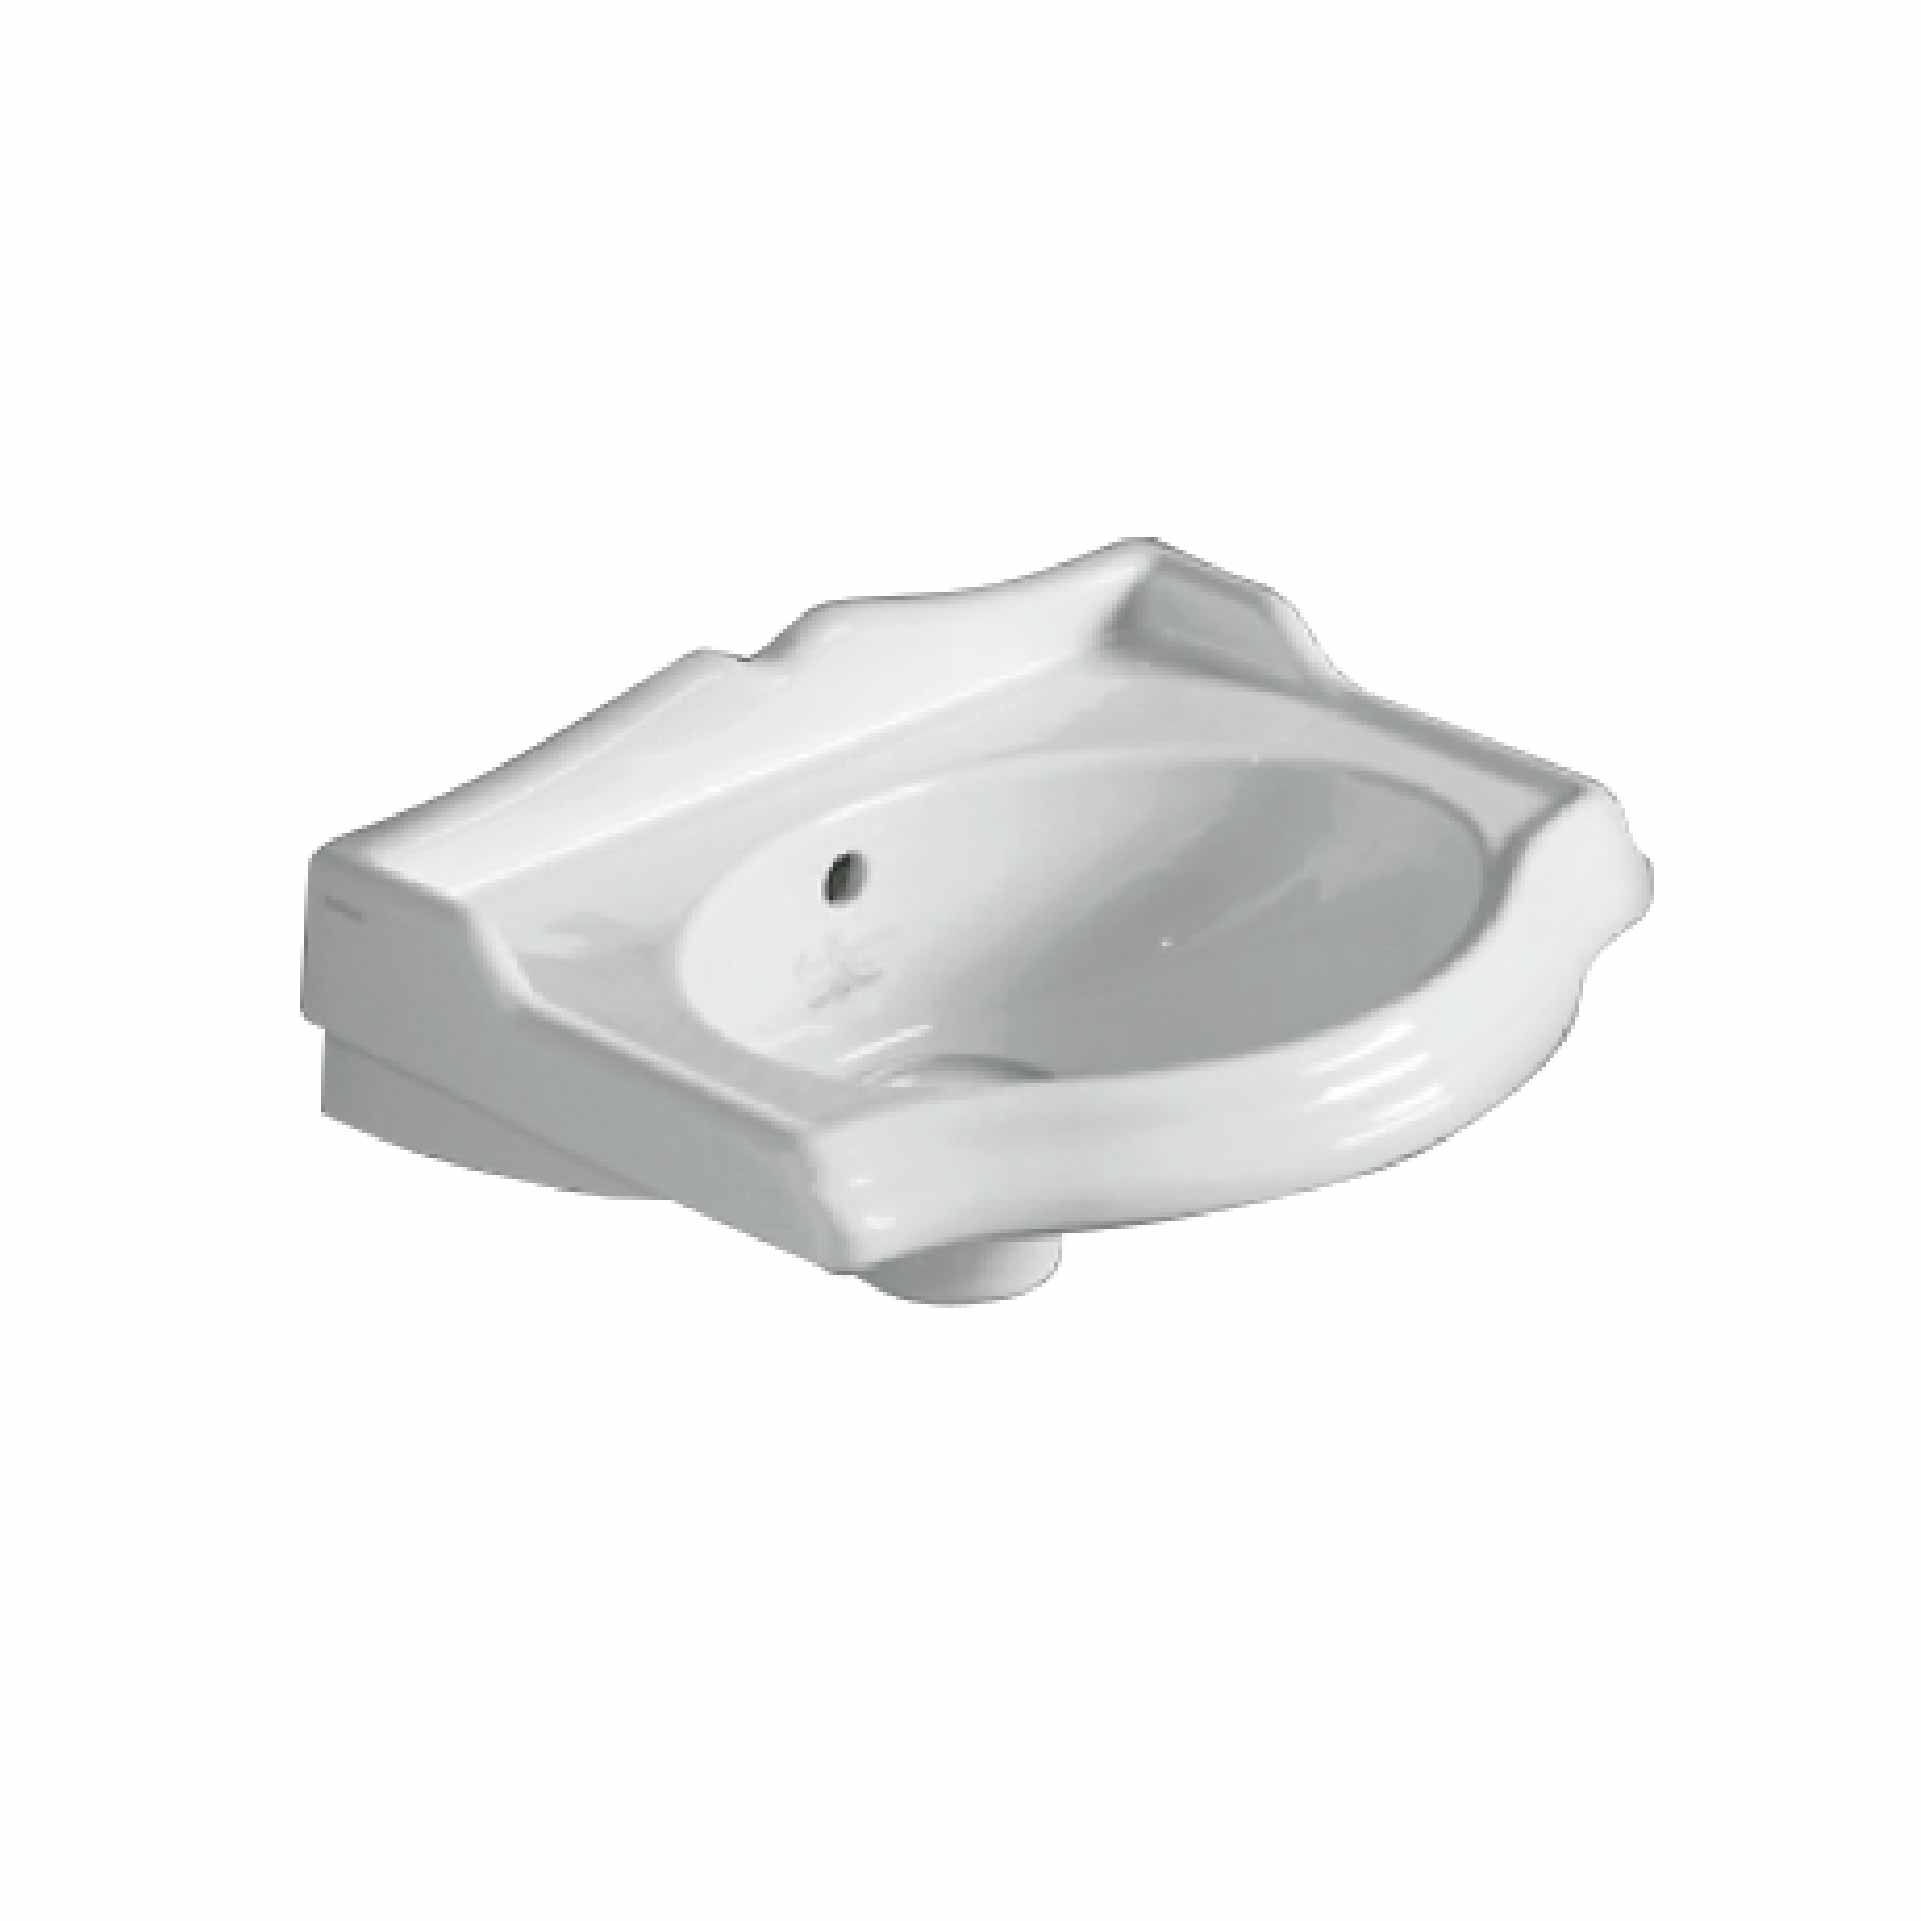 MS03-8LM137 Victorian wash-hand basin